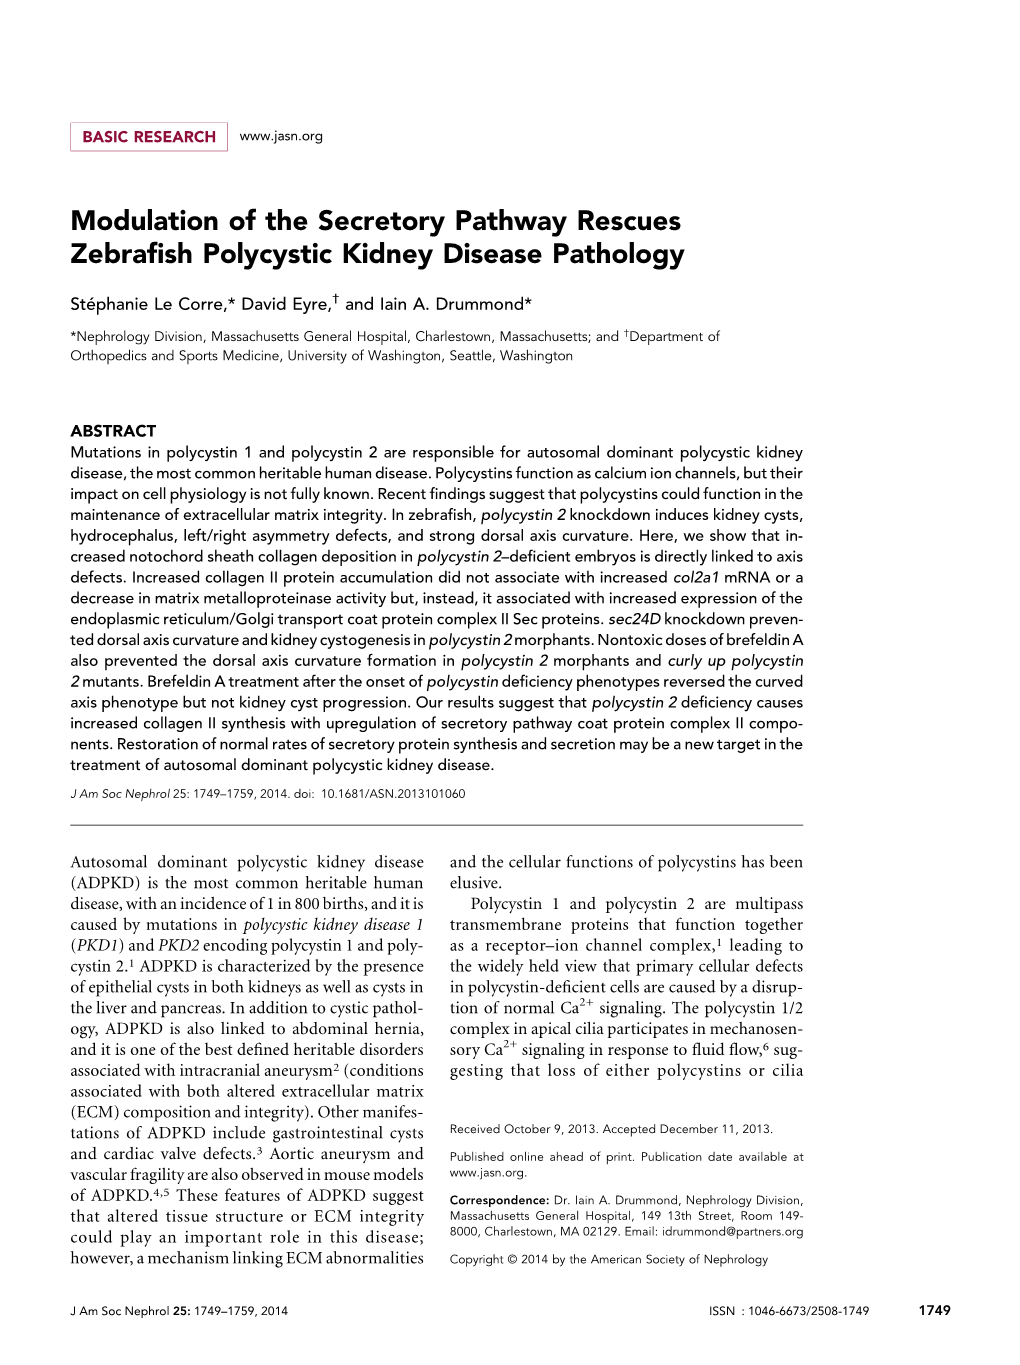 Modulation of the Secretory Pathway Rescues Zebrafish Polycystic